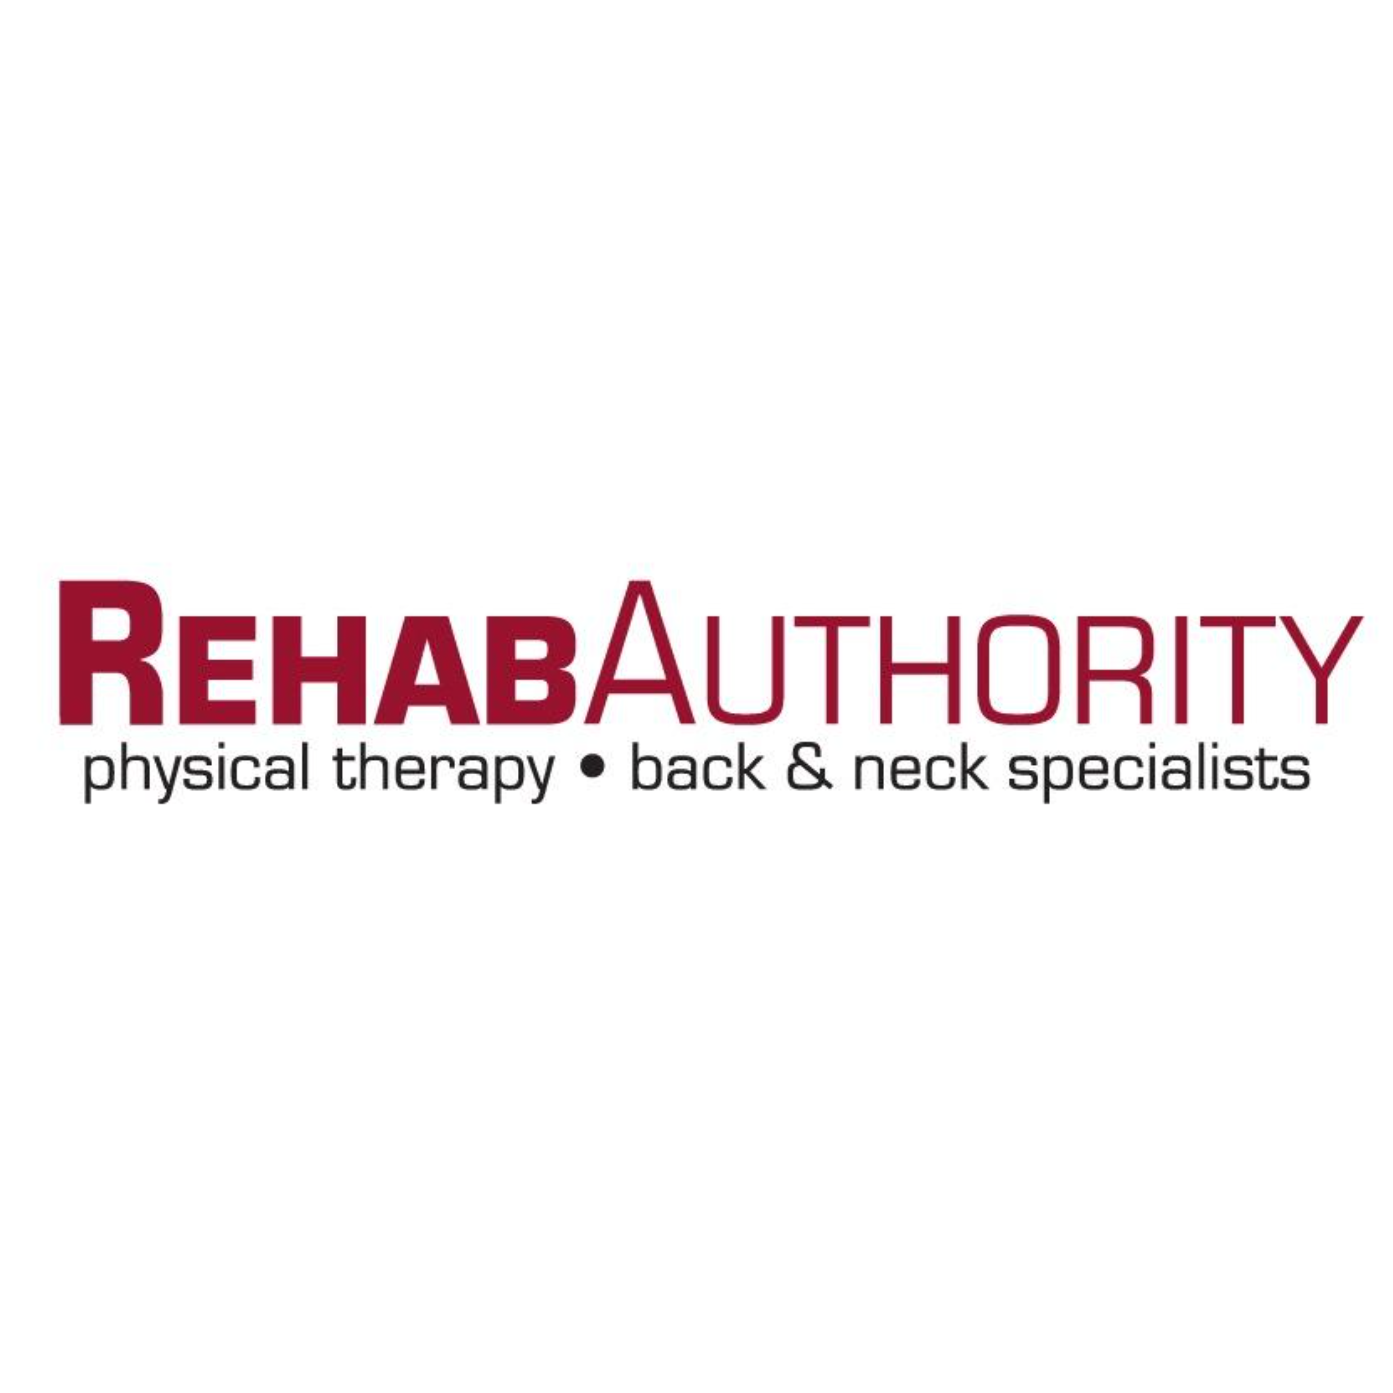 RehabAuthority - Moorhead - Moorhead, MN 56560 - (218)233-3690 | ShowMeLocal.com